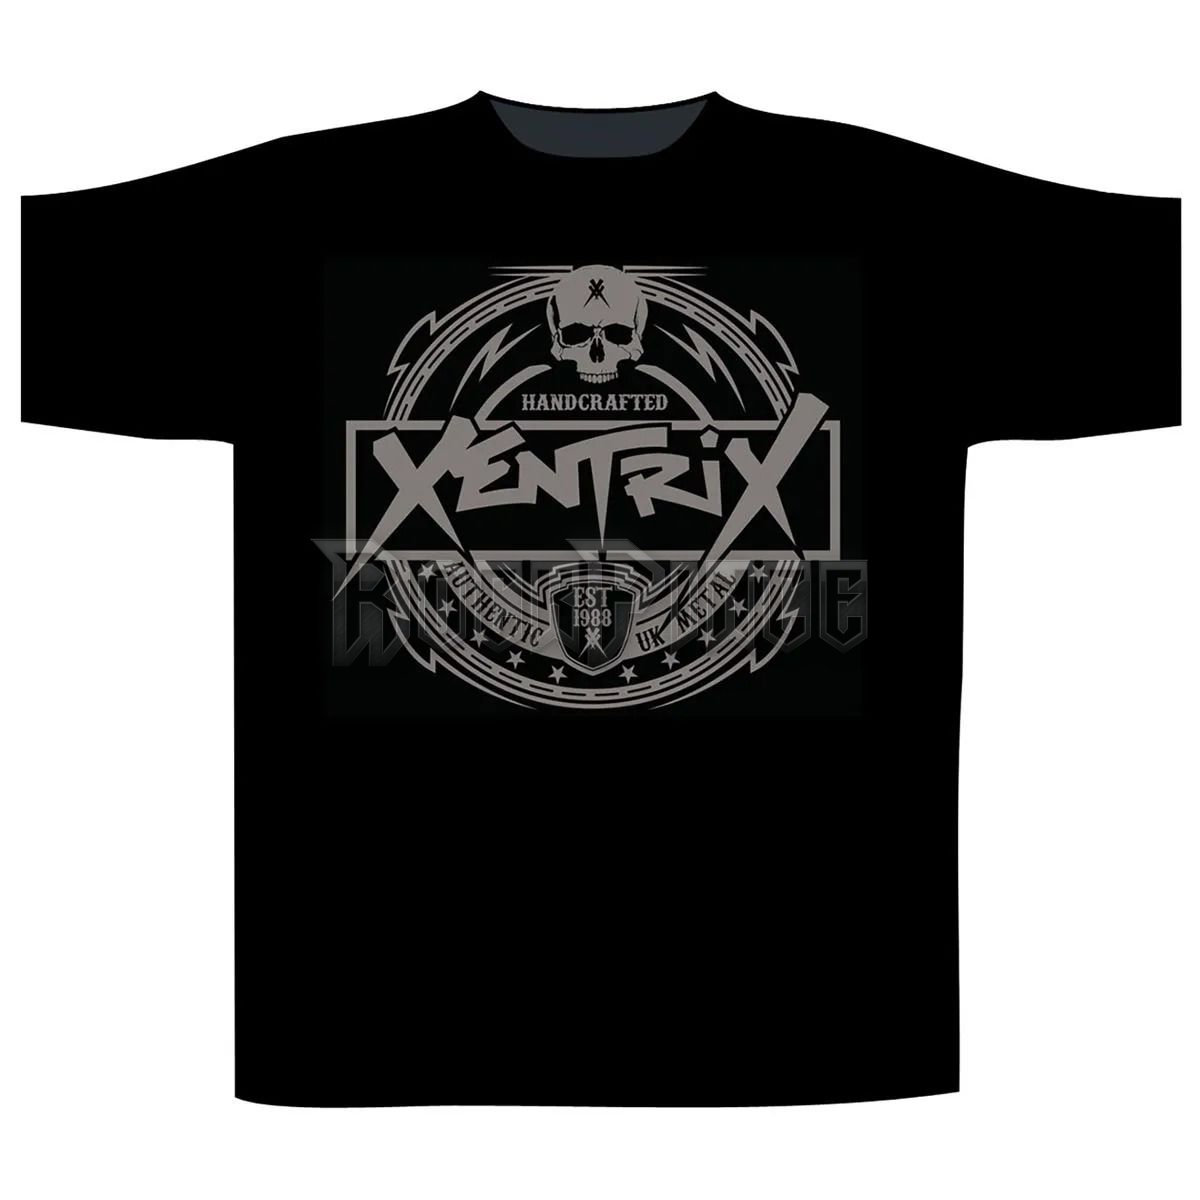 XENTRIX - EST. 1988 - unisex póló - ST2336